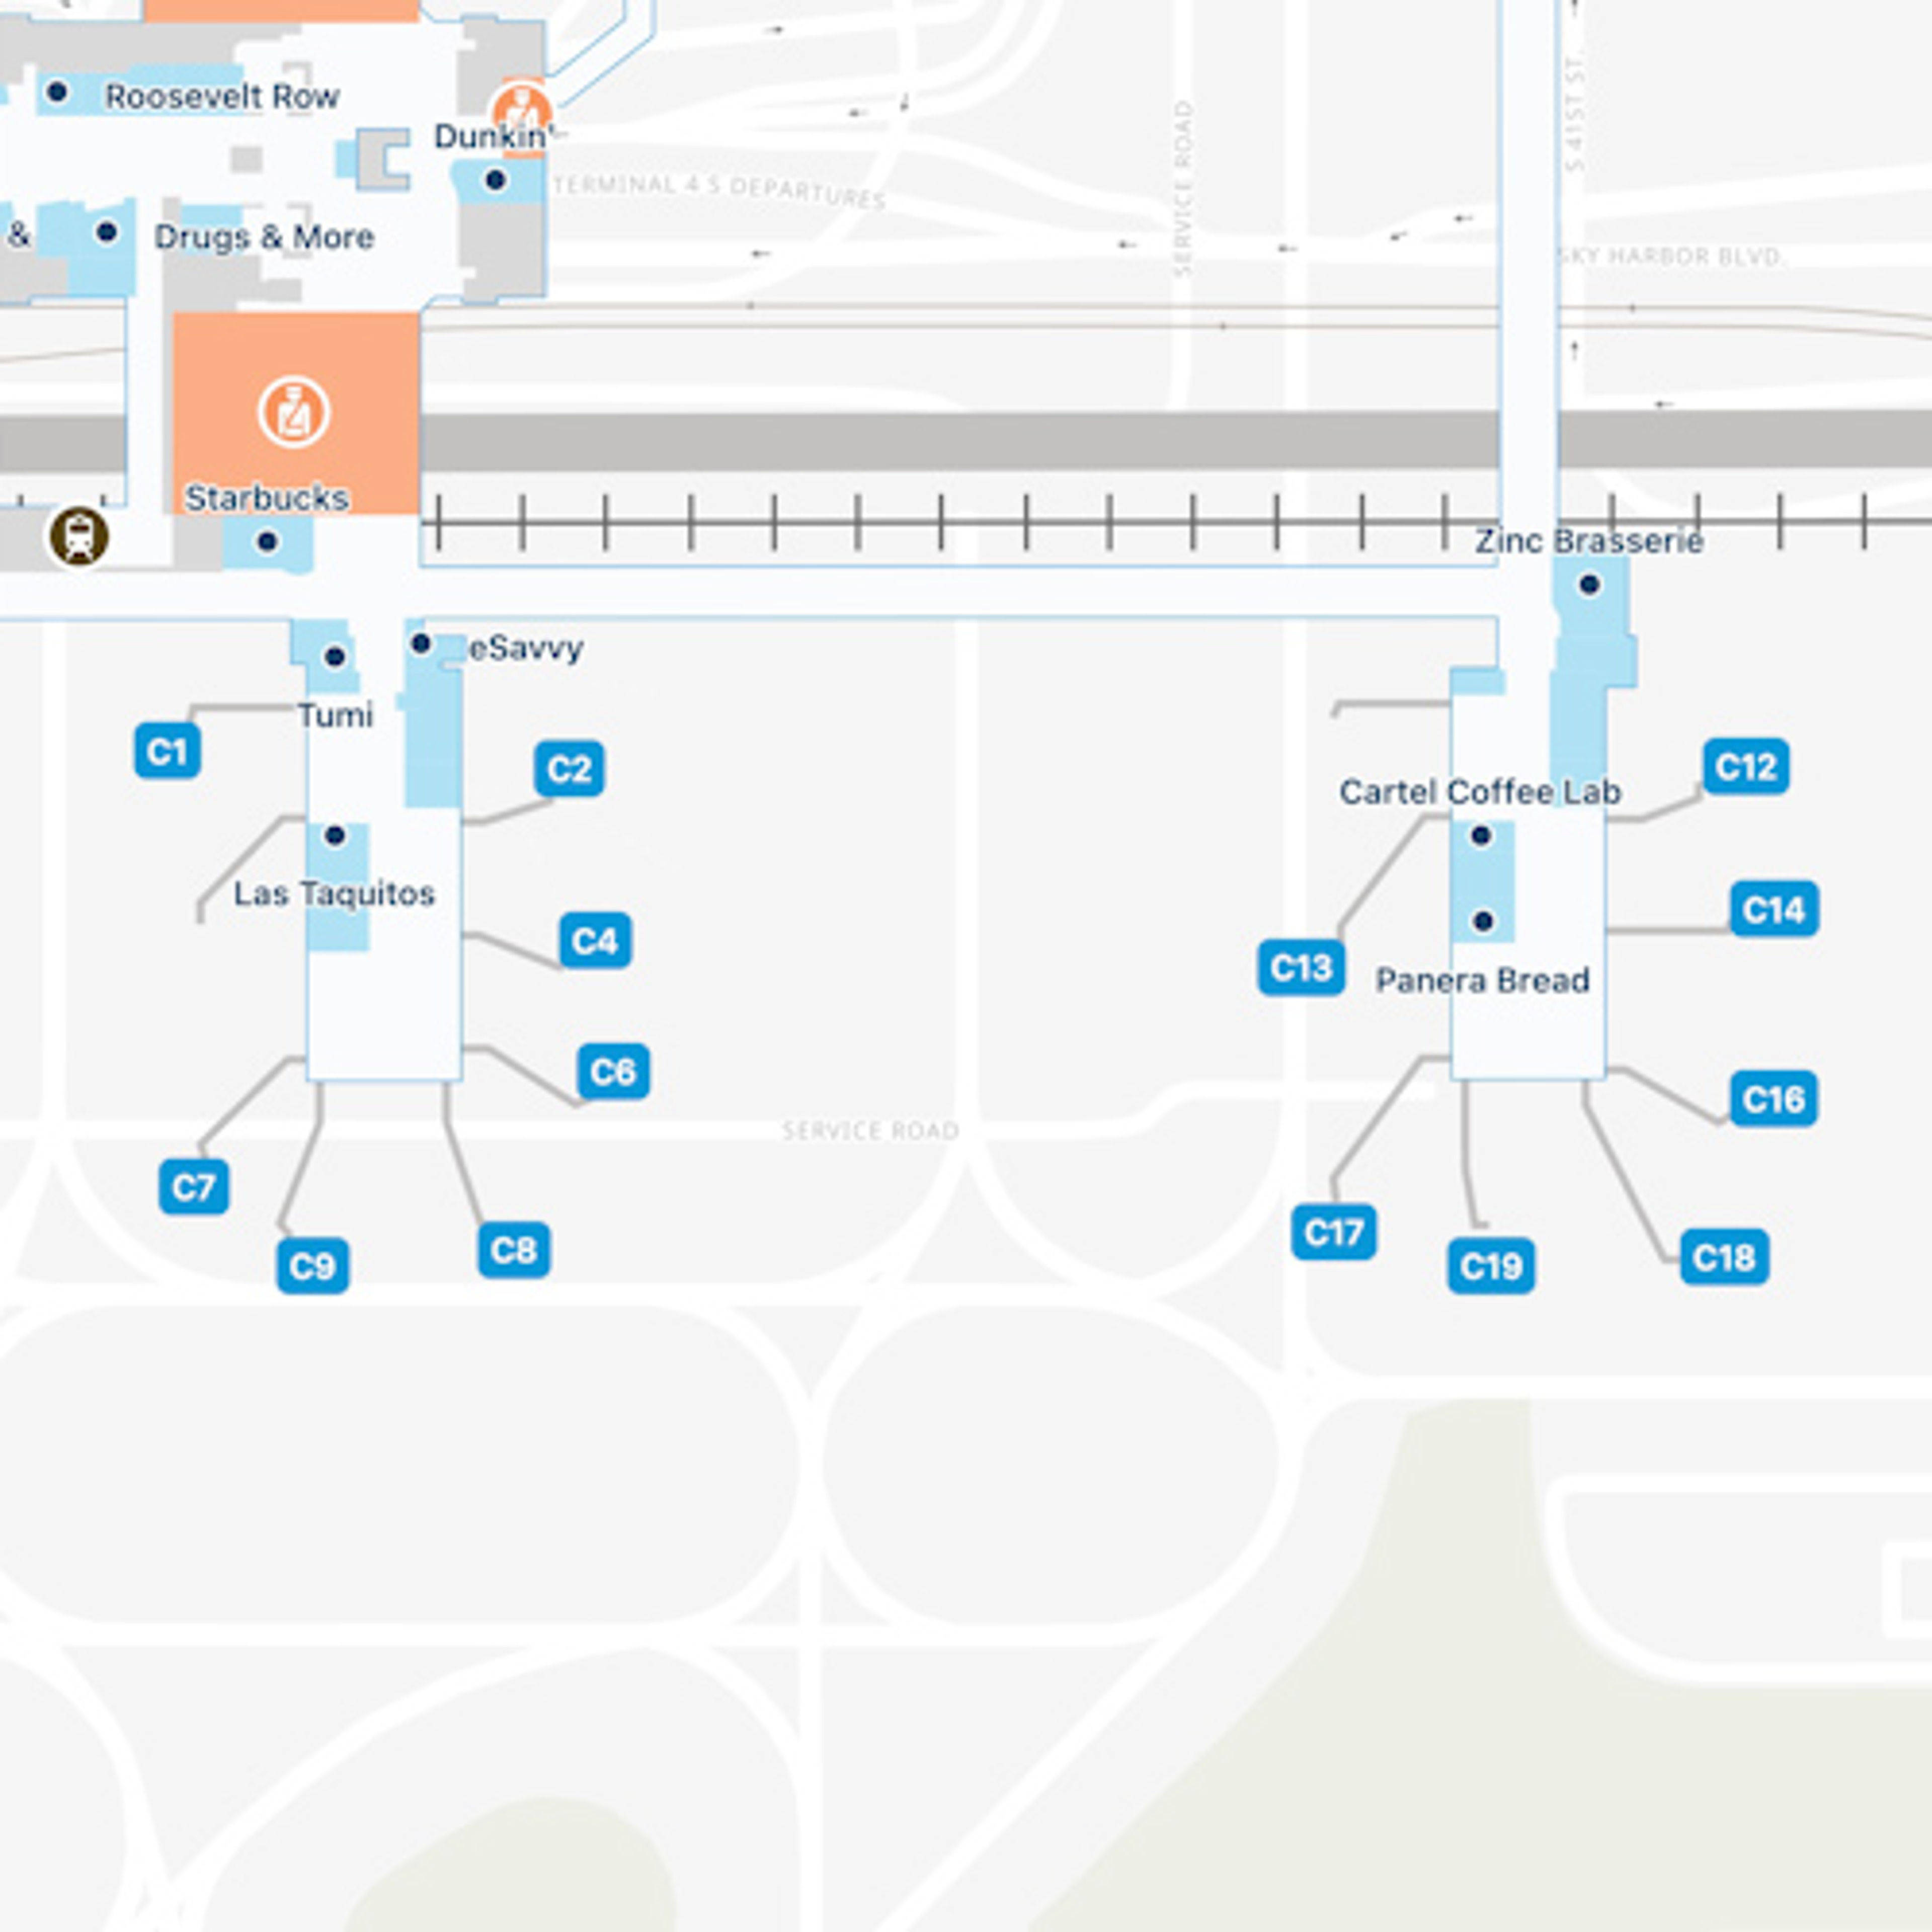 PHX Concourse C Map